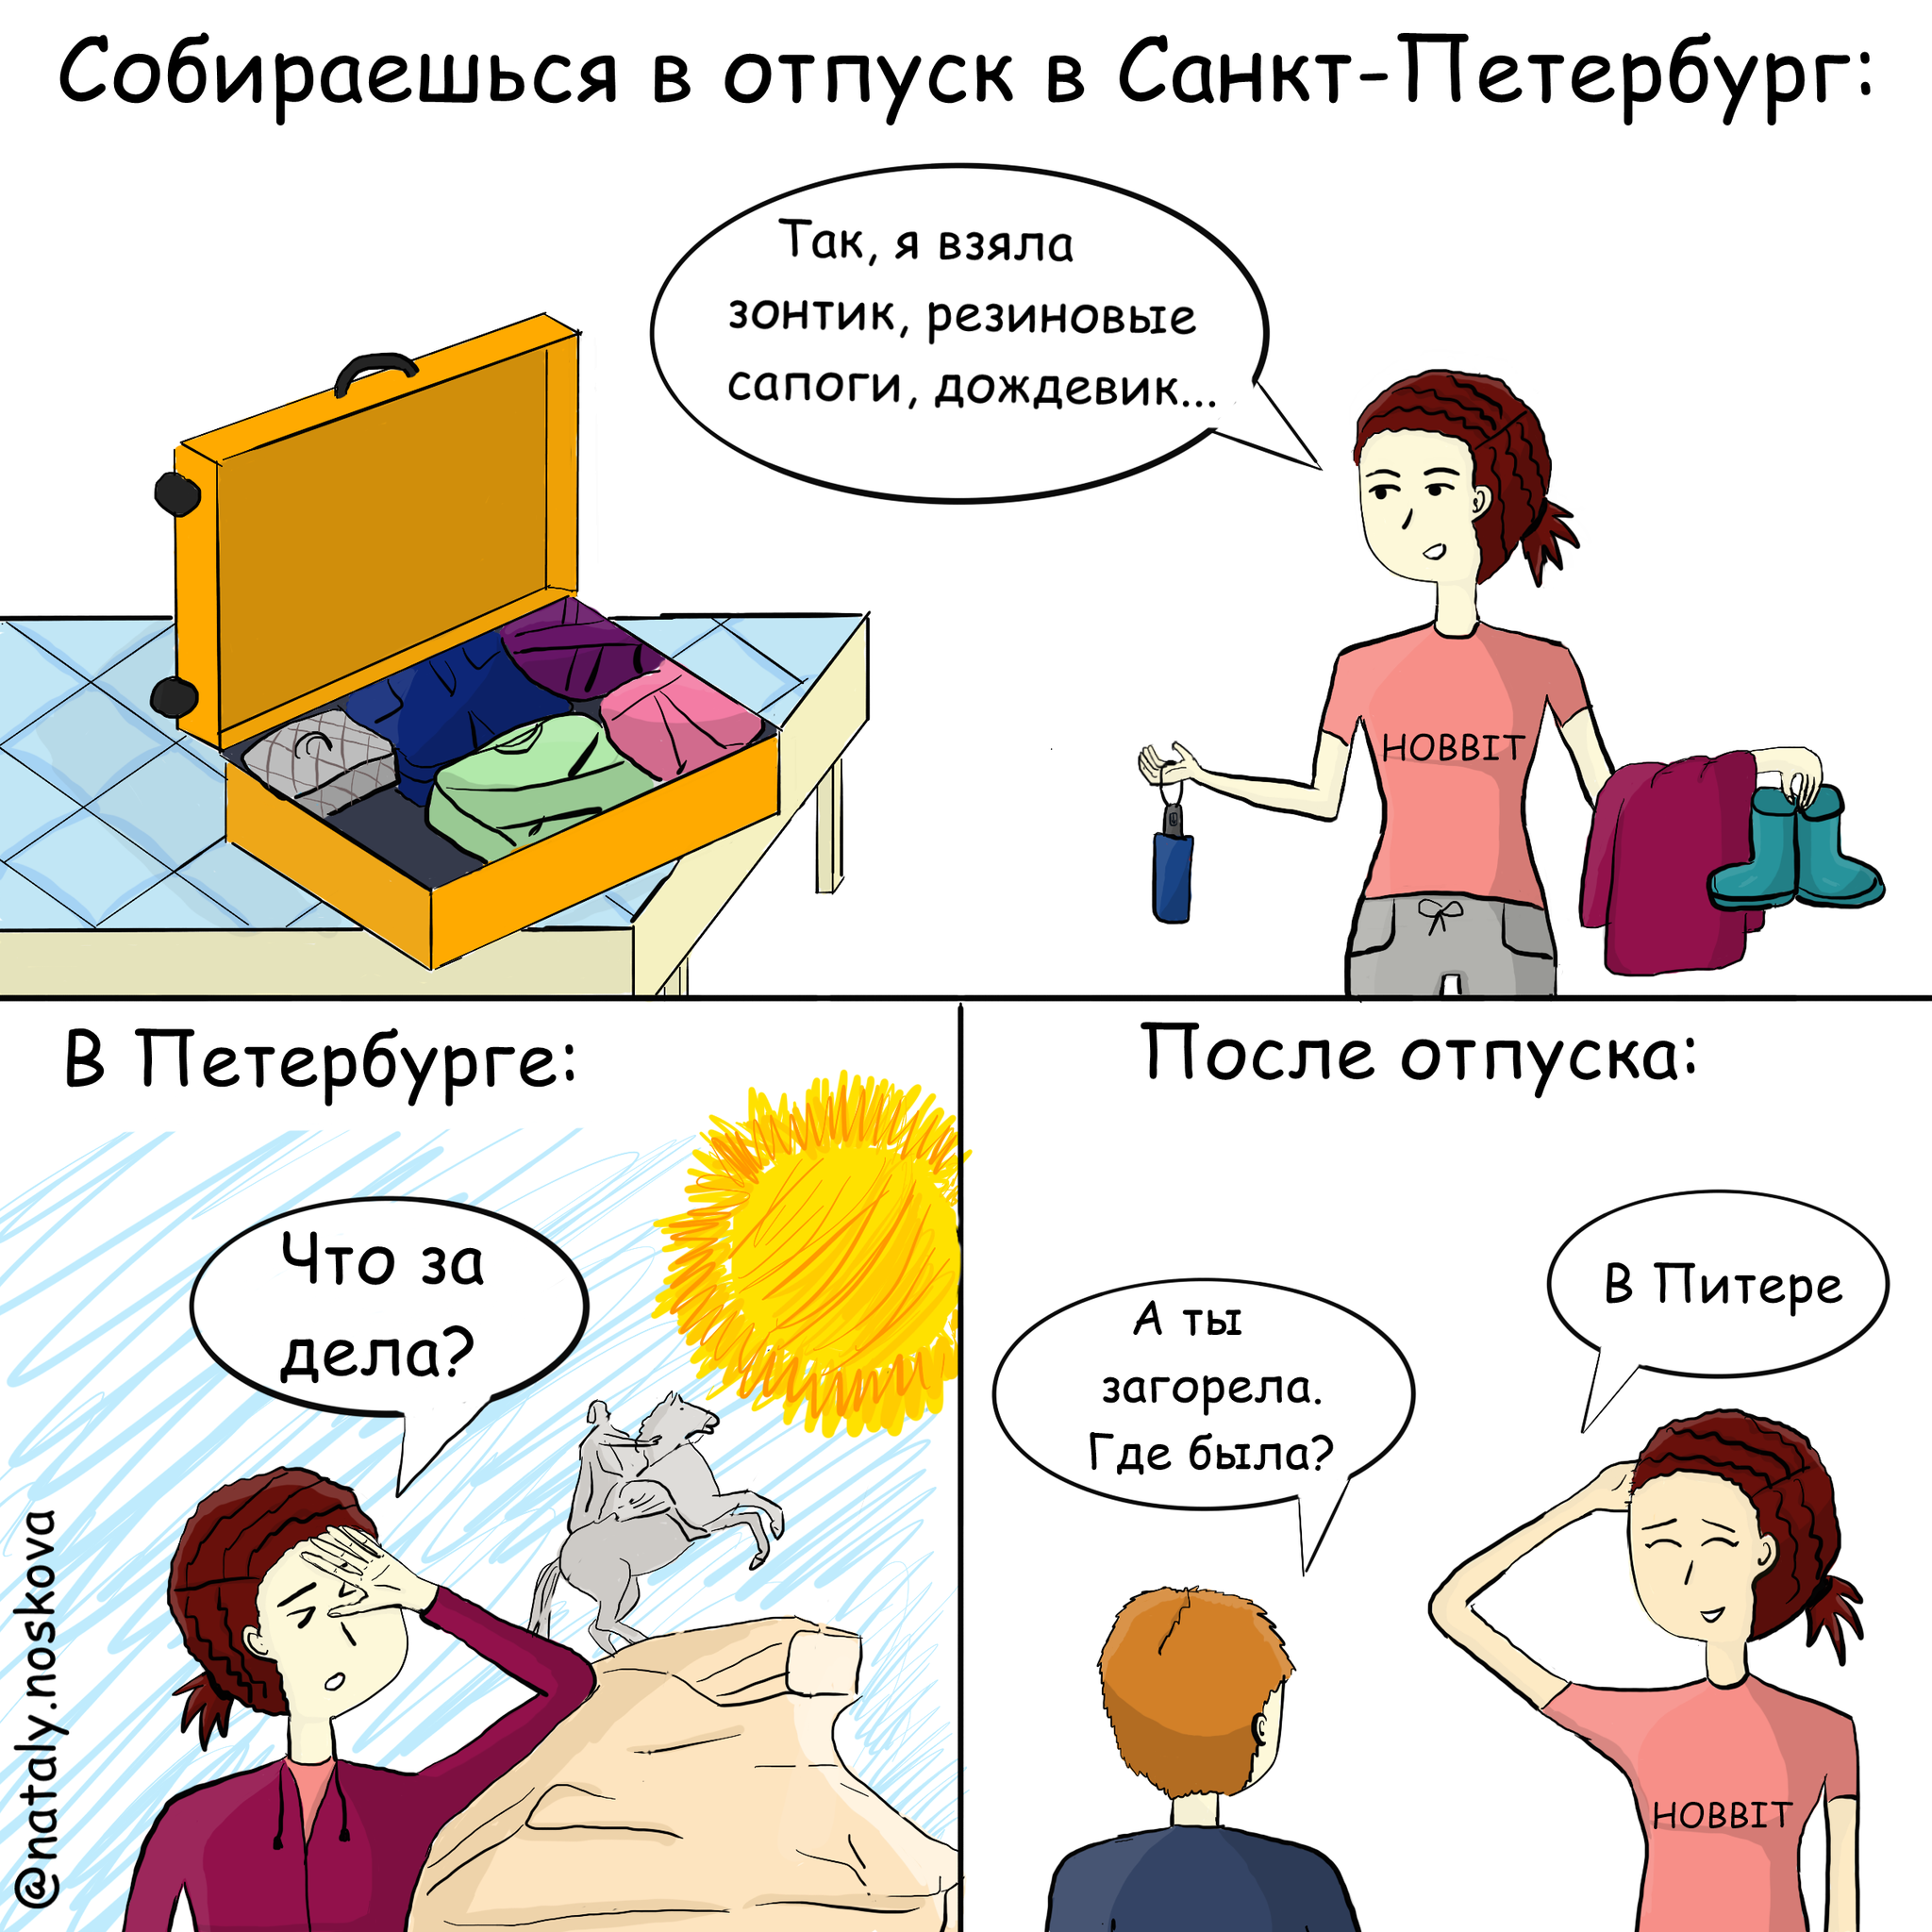 Lucky - My, Natalyhumor, Humor, Comics, Stereotypes, Drawing, Weather, Saint Petersburg, Luck